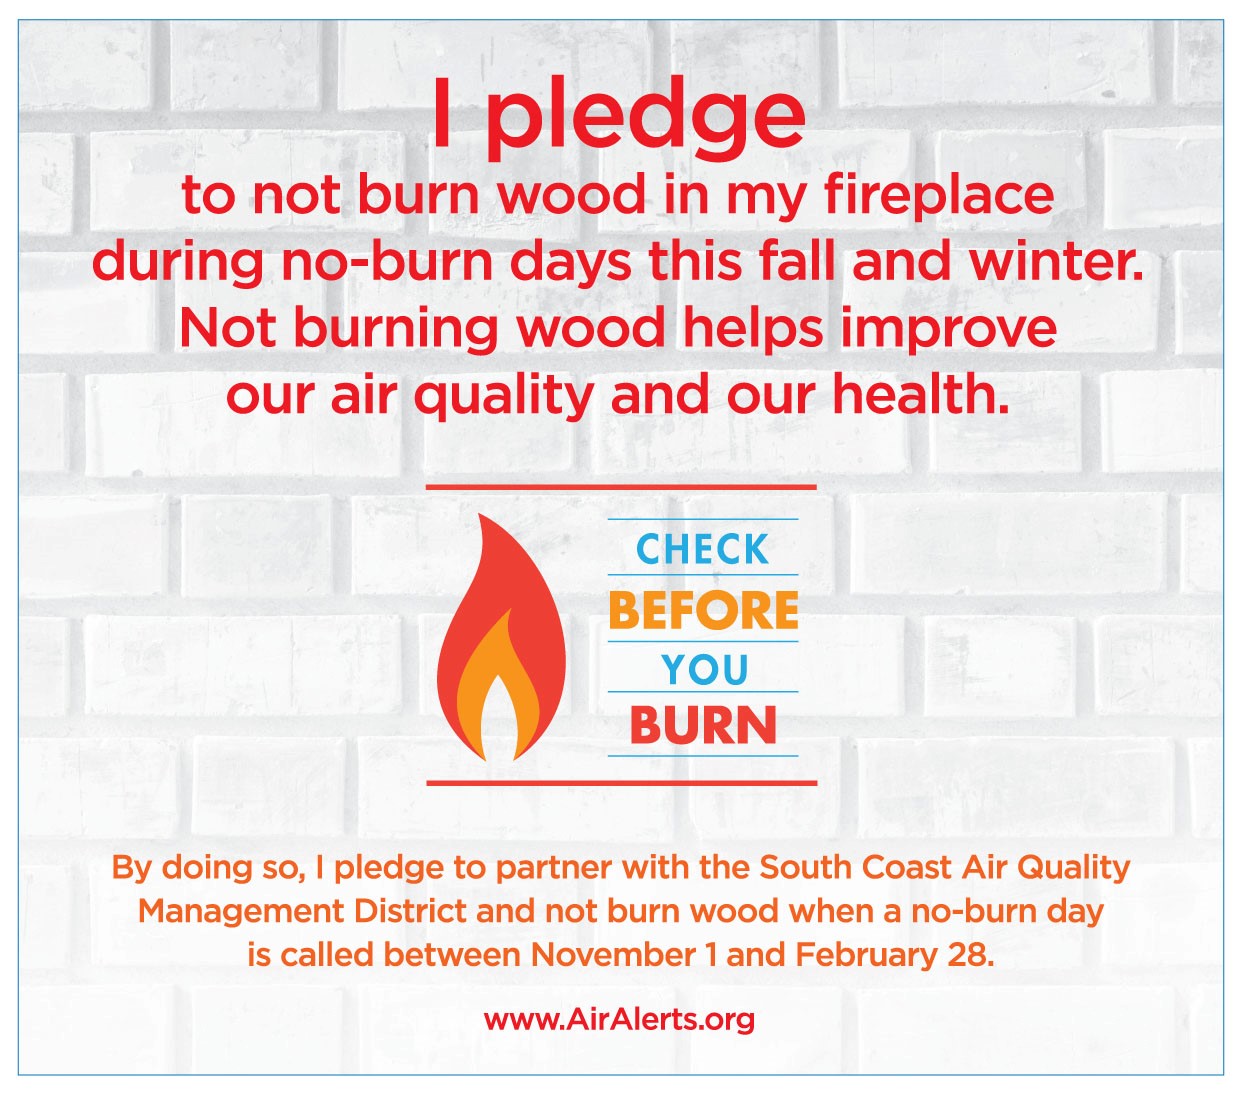 Check Before You Burn pledge banner